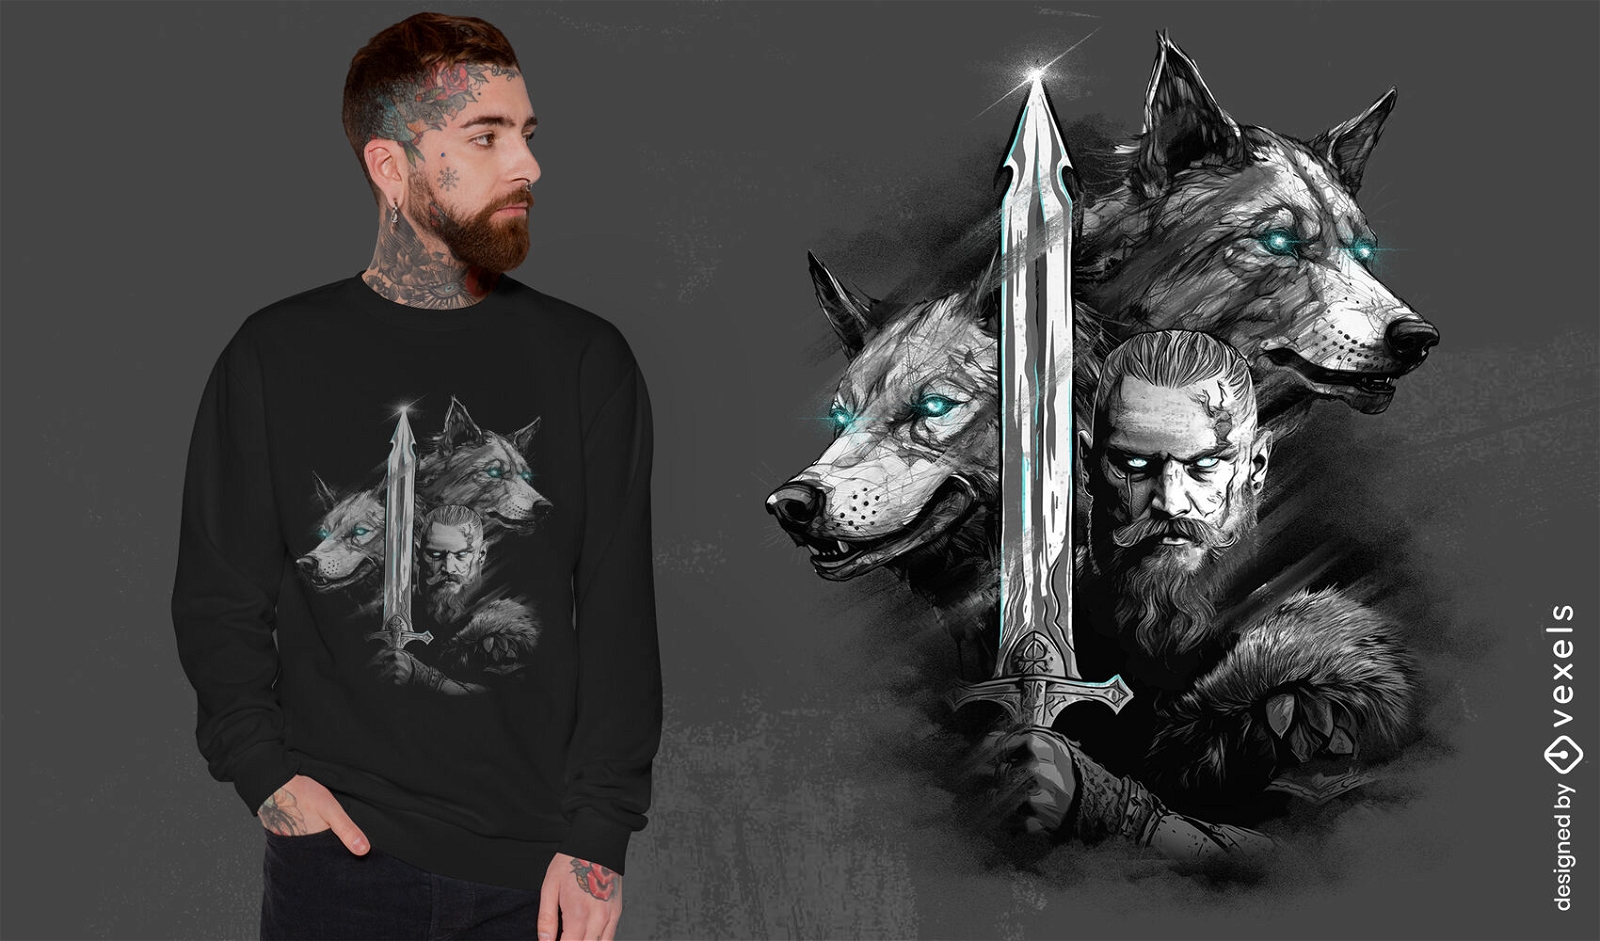 Dise?o de camiseta legendario de vikingos y lobos.